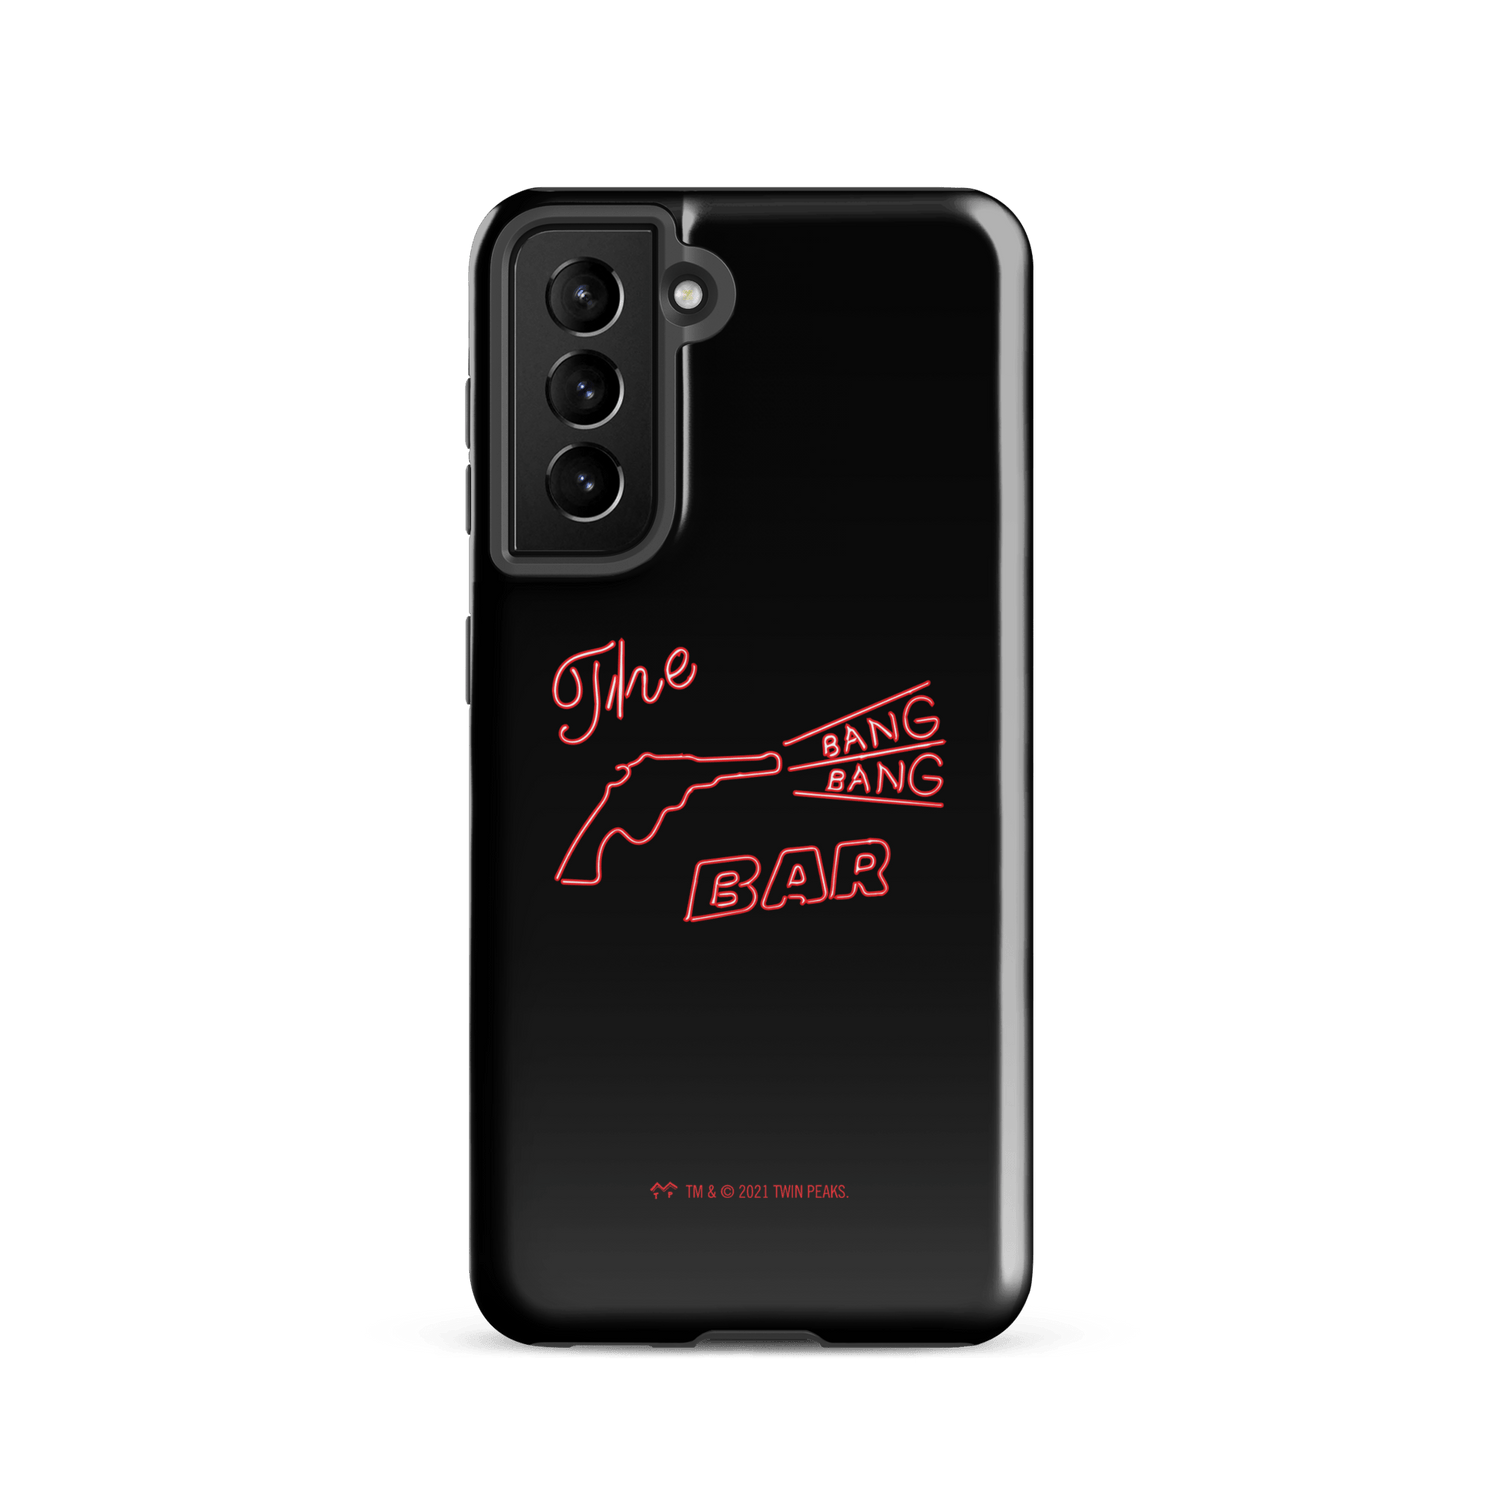 Twin Peaks Bang Bang Bar Tough Phone Case - Samsung - Paramount Shop